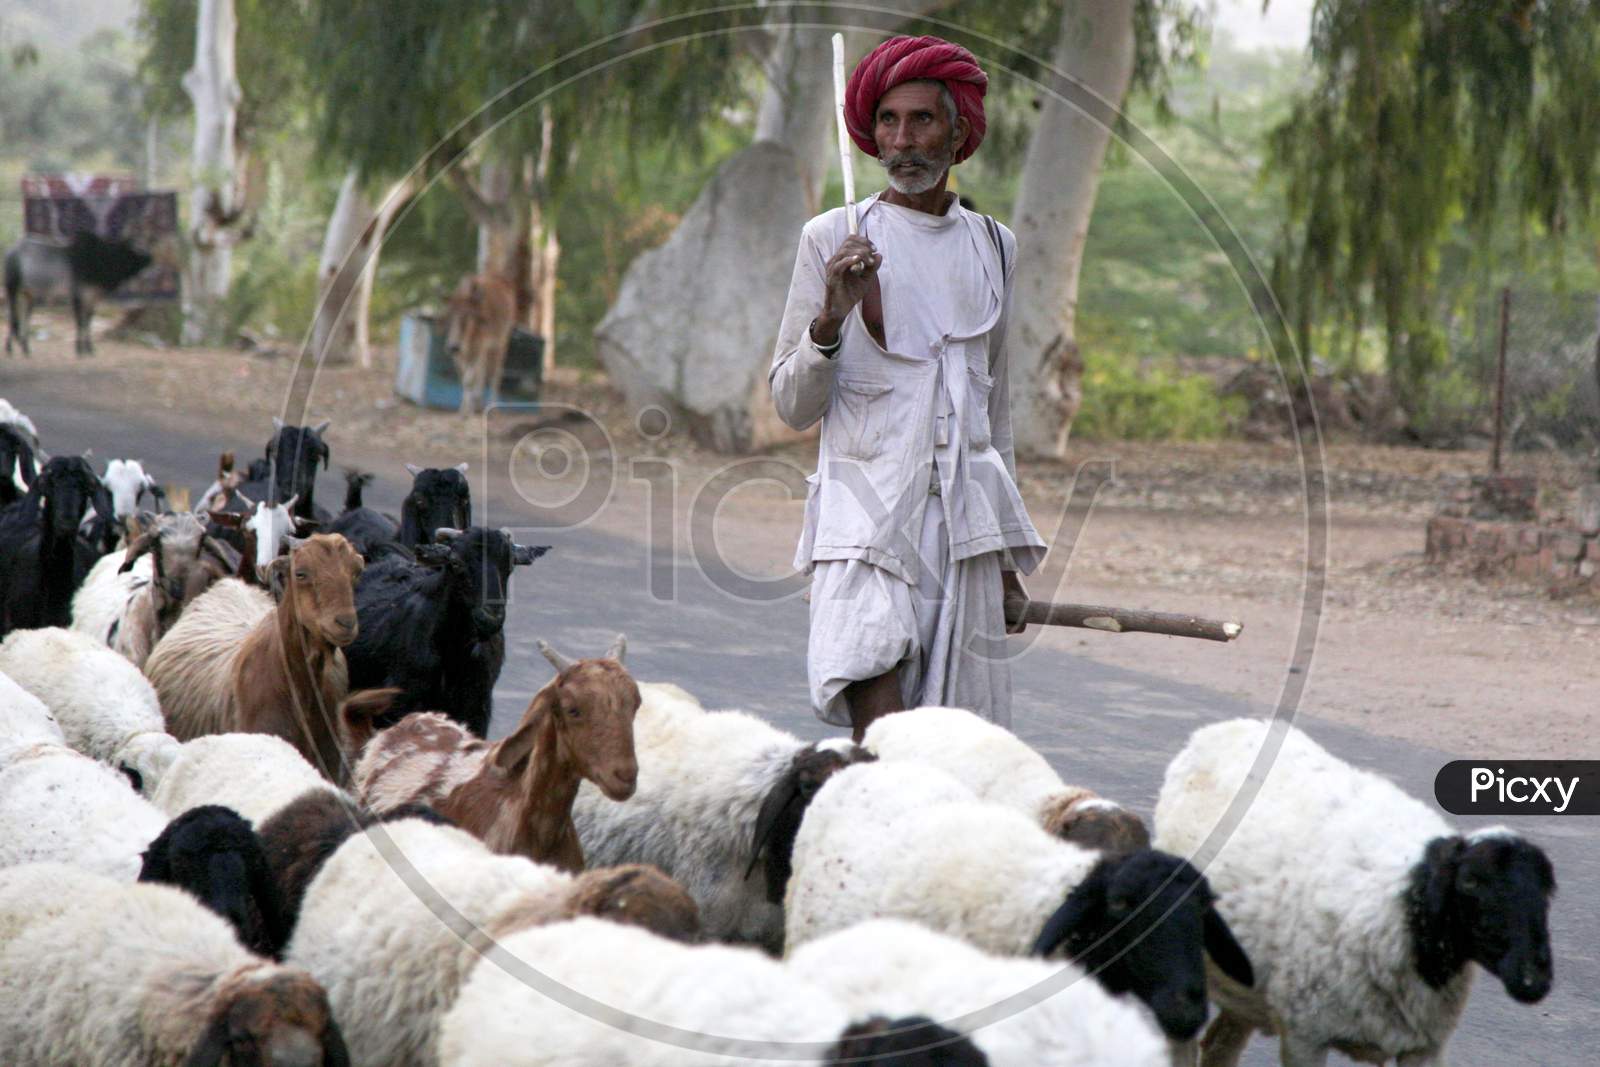 A Rajasthani Shepherd